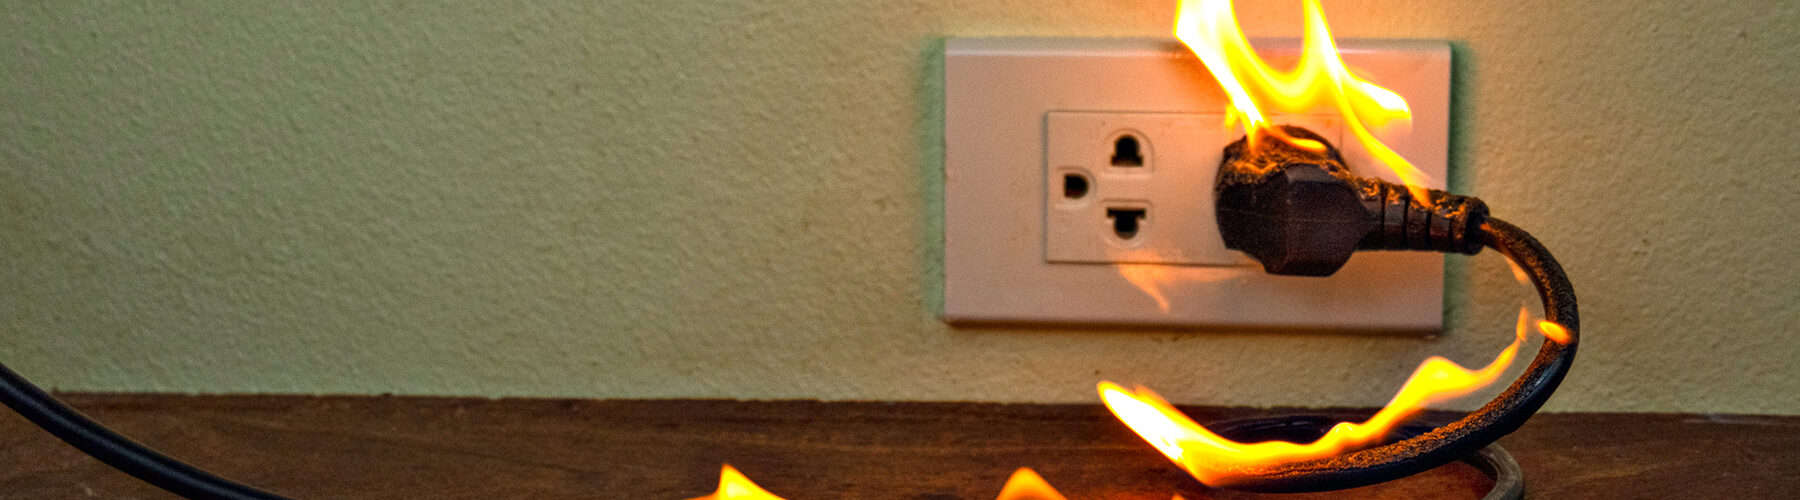 electric wall plug on fire